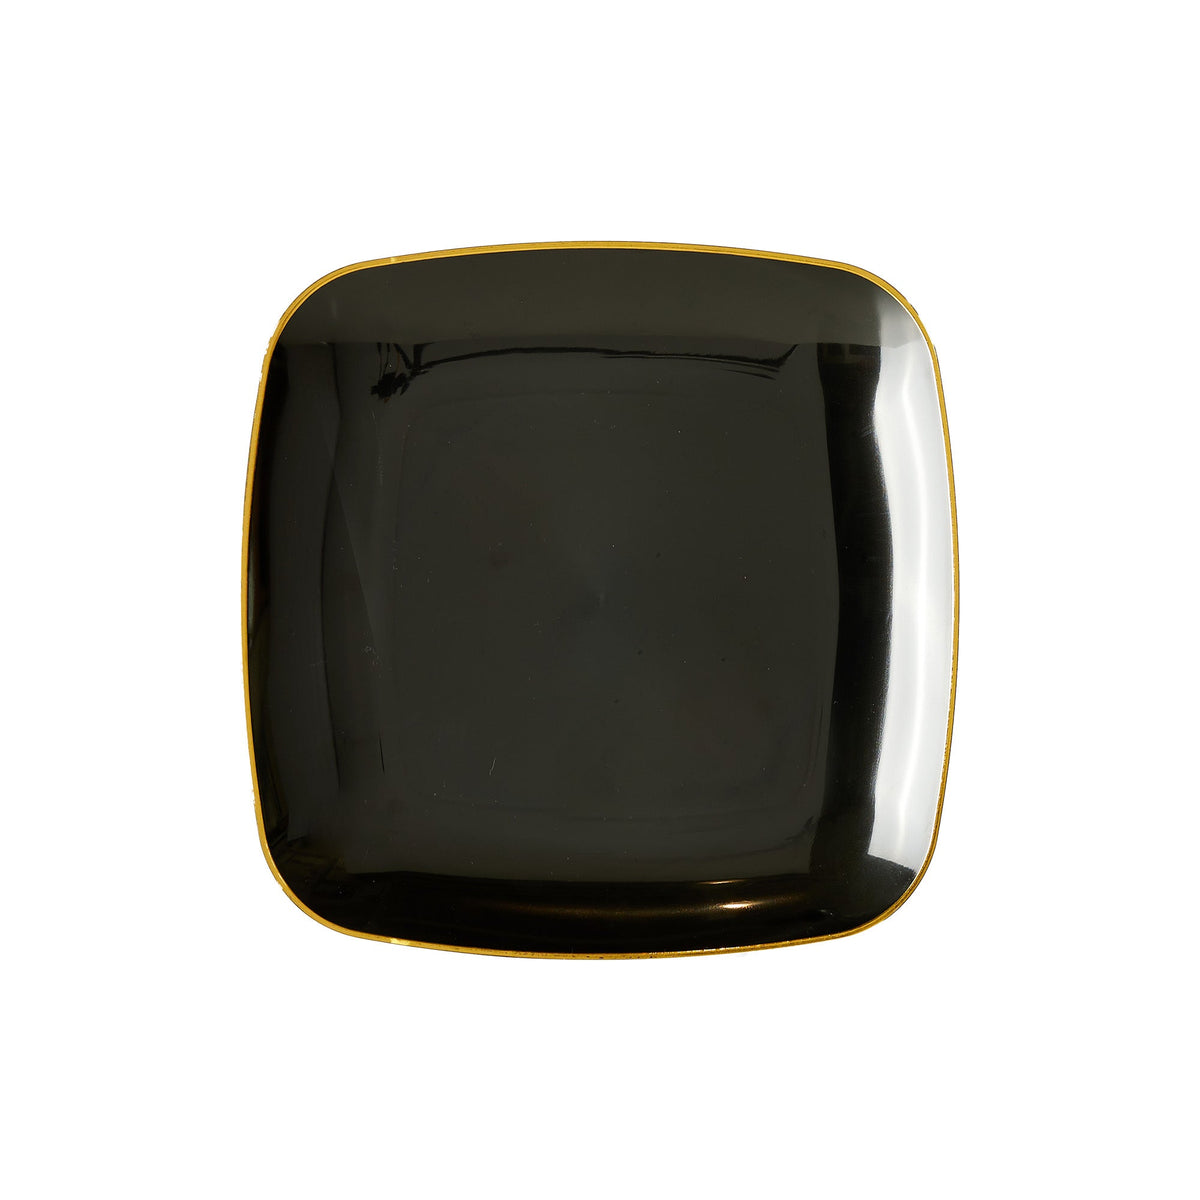 MADISON IMPORTS Disposable-Plasticware Black Premium Quality Square Plates with Gold Rim, 8.5 Inches, 10 Count 775310991255